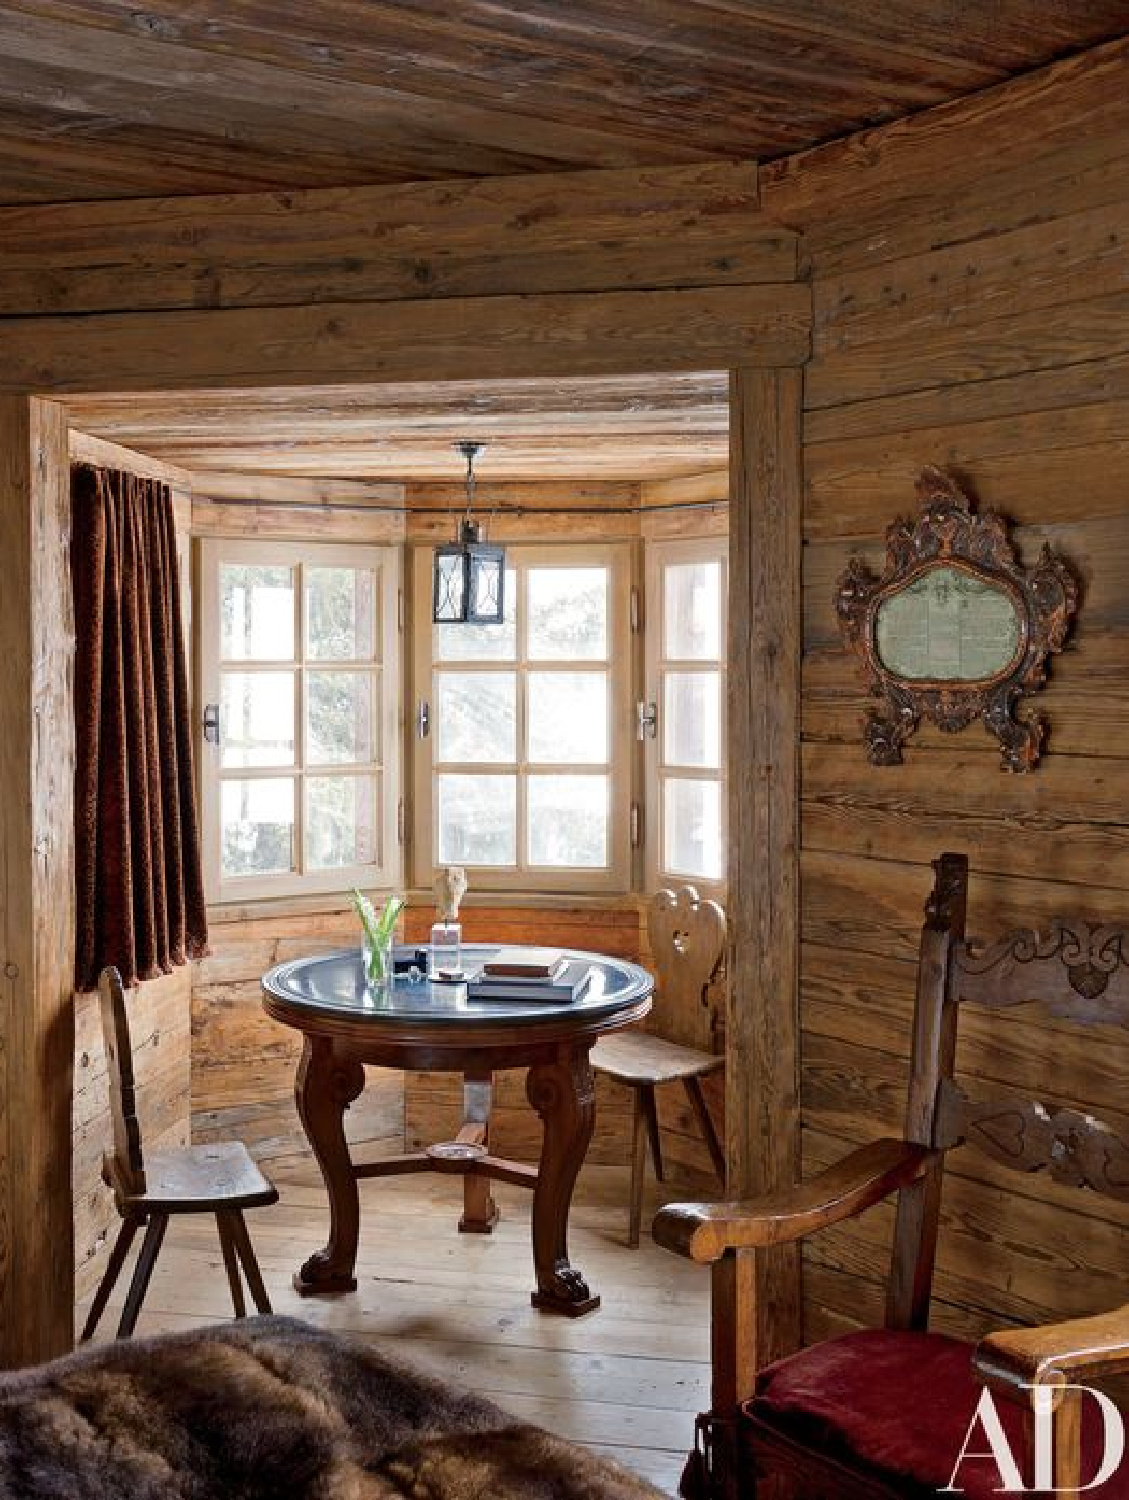 Studio Peregalli designed interior in a rustic Swiss Alps home in Architectural Digest. #europeancottage #warmcozyinteriors #rusticelegance #europeancountry